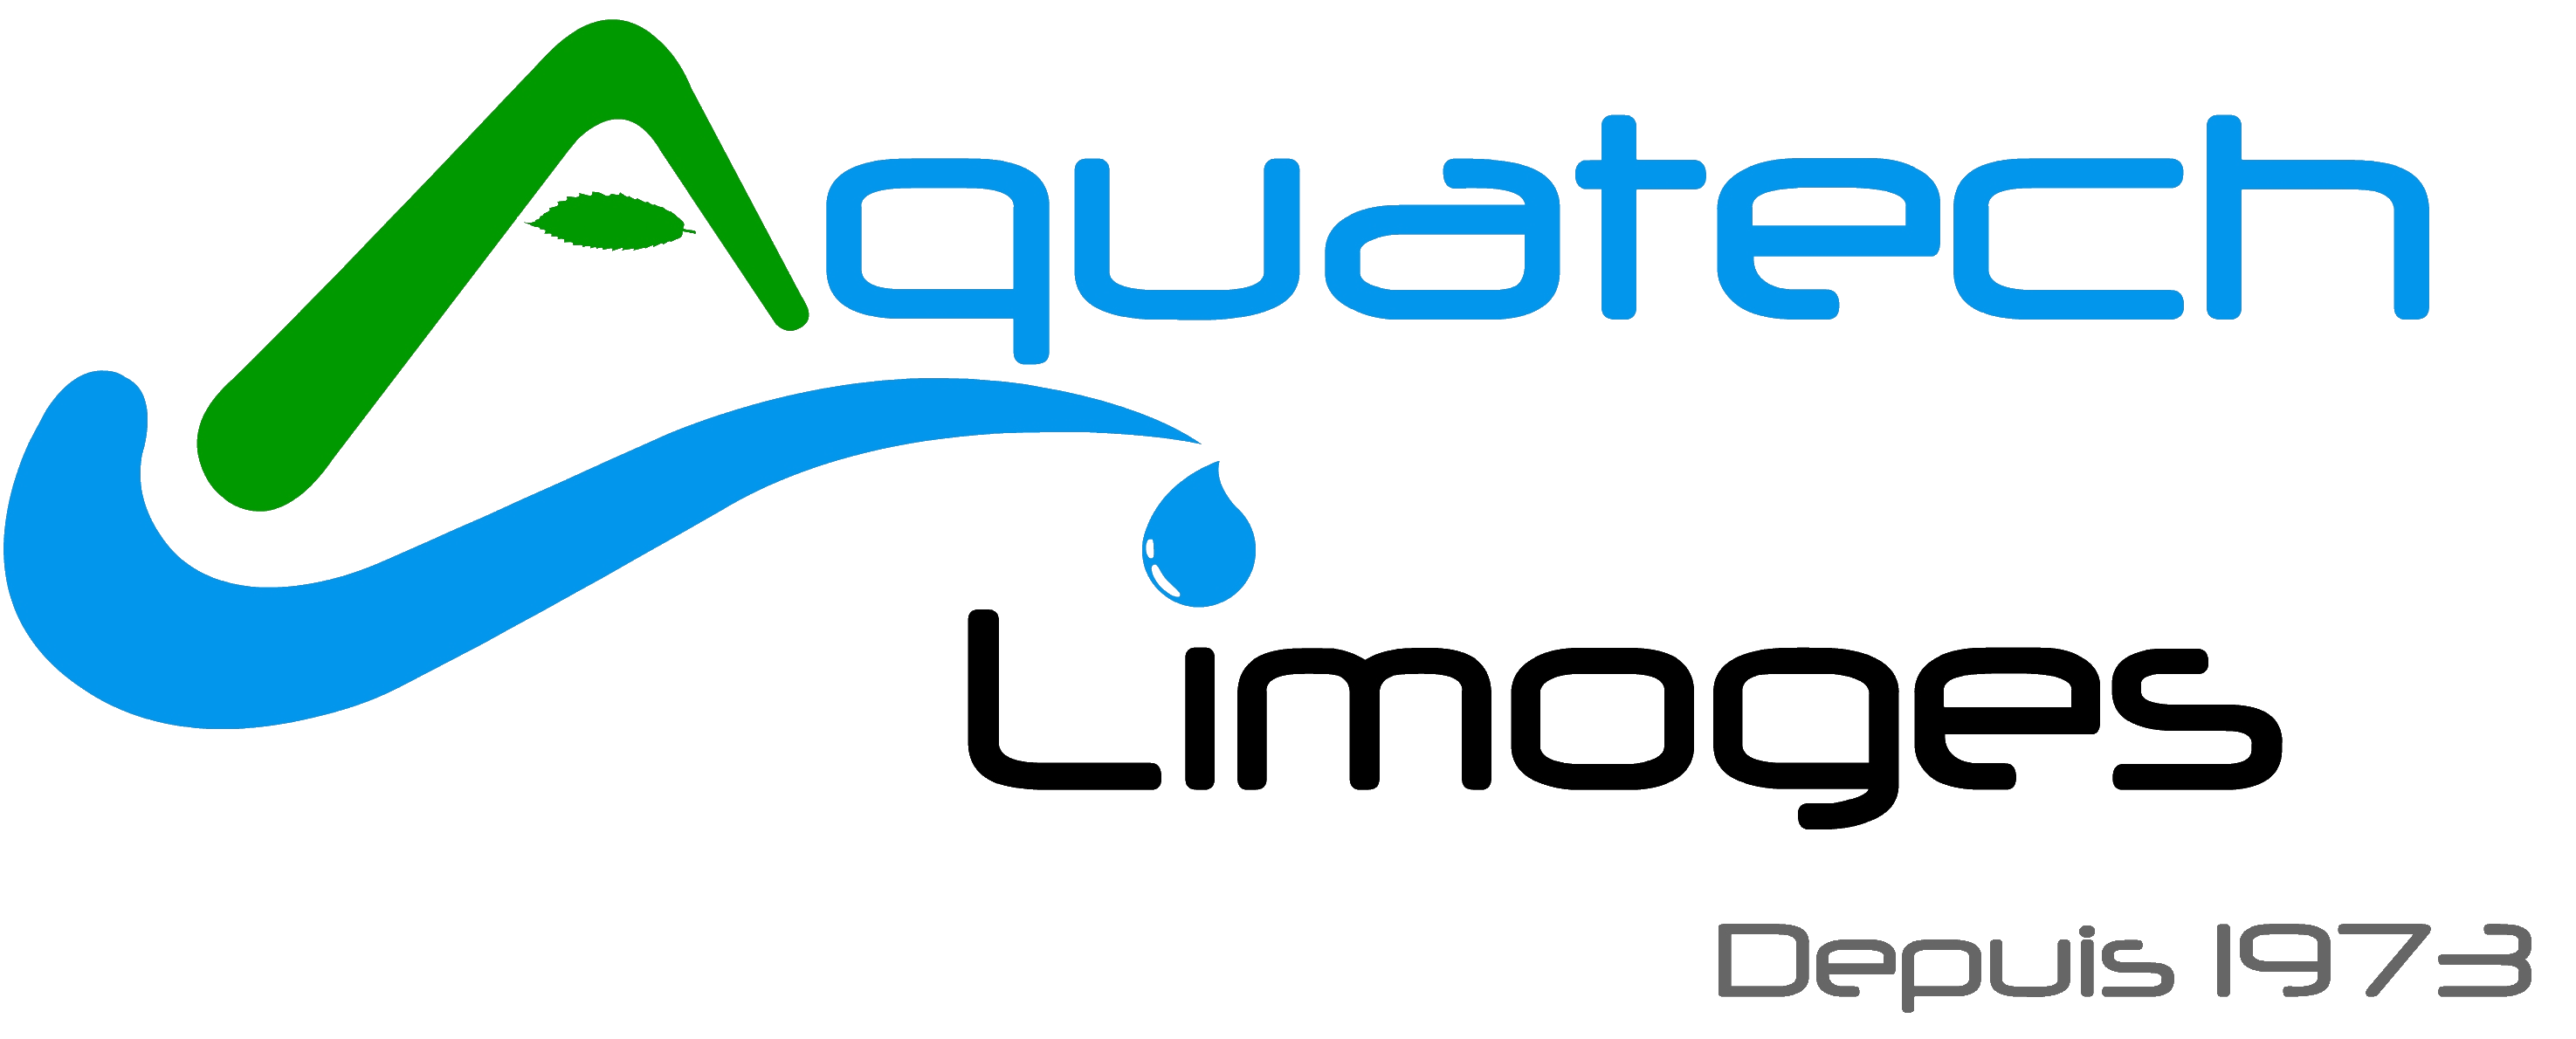 Aquatech Limoges 